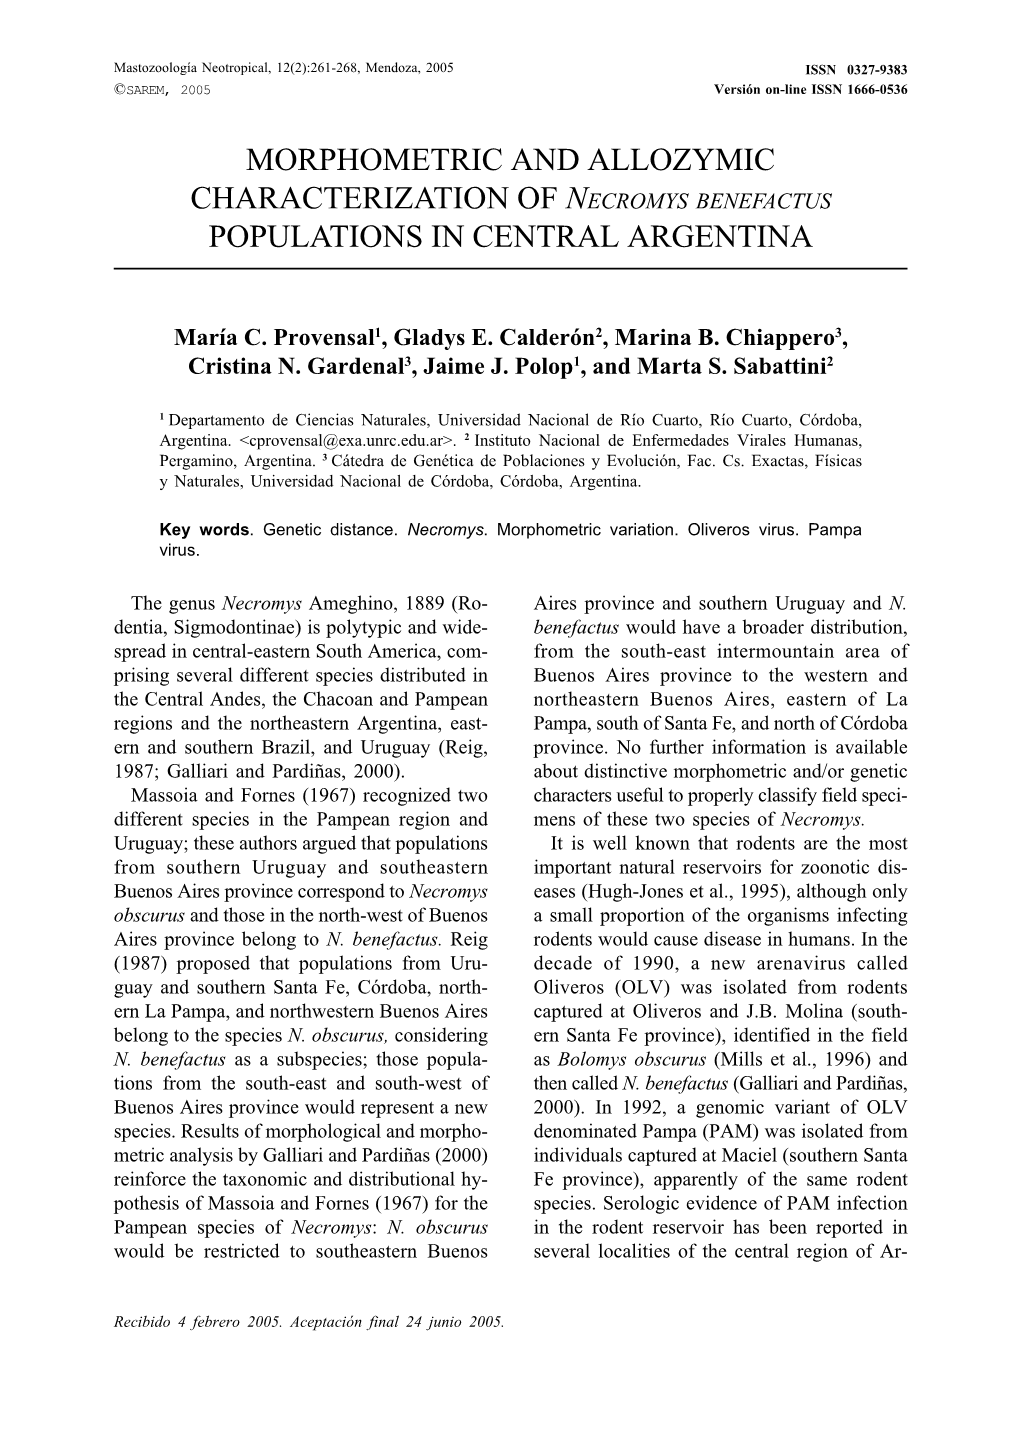 Necromys Benefactus Populations in Central Argentina